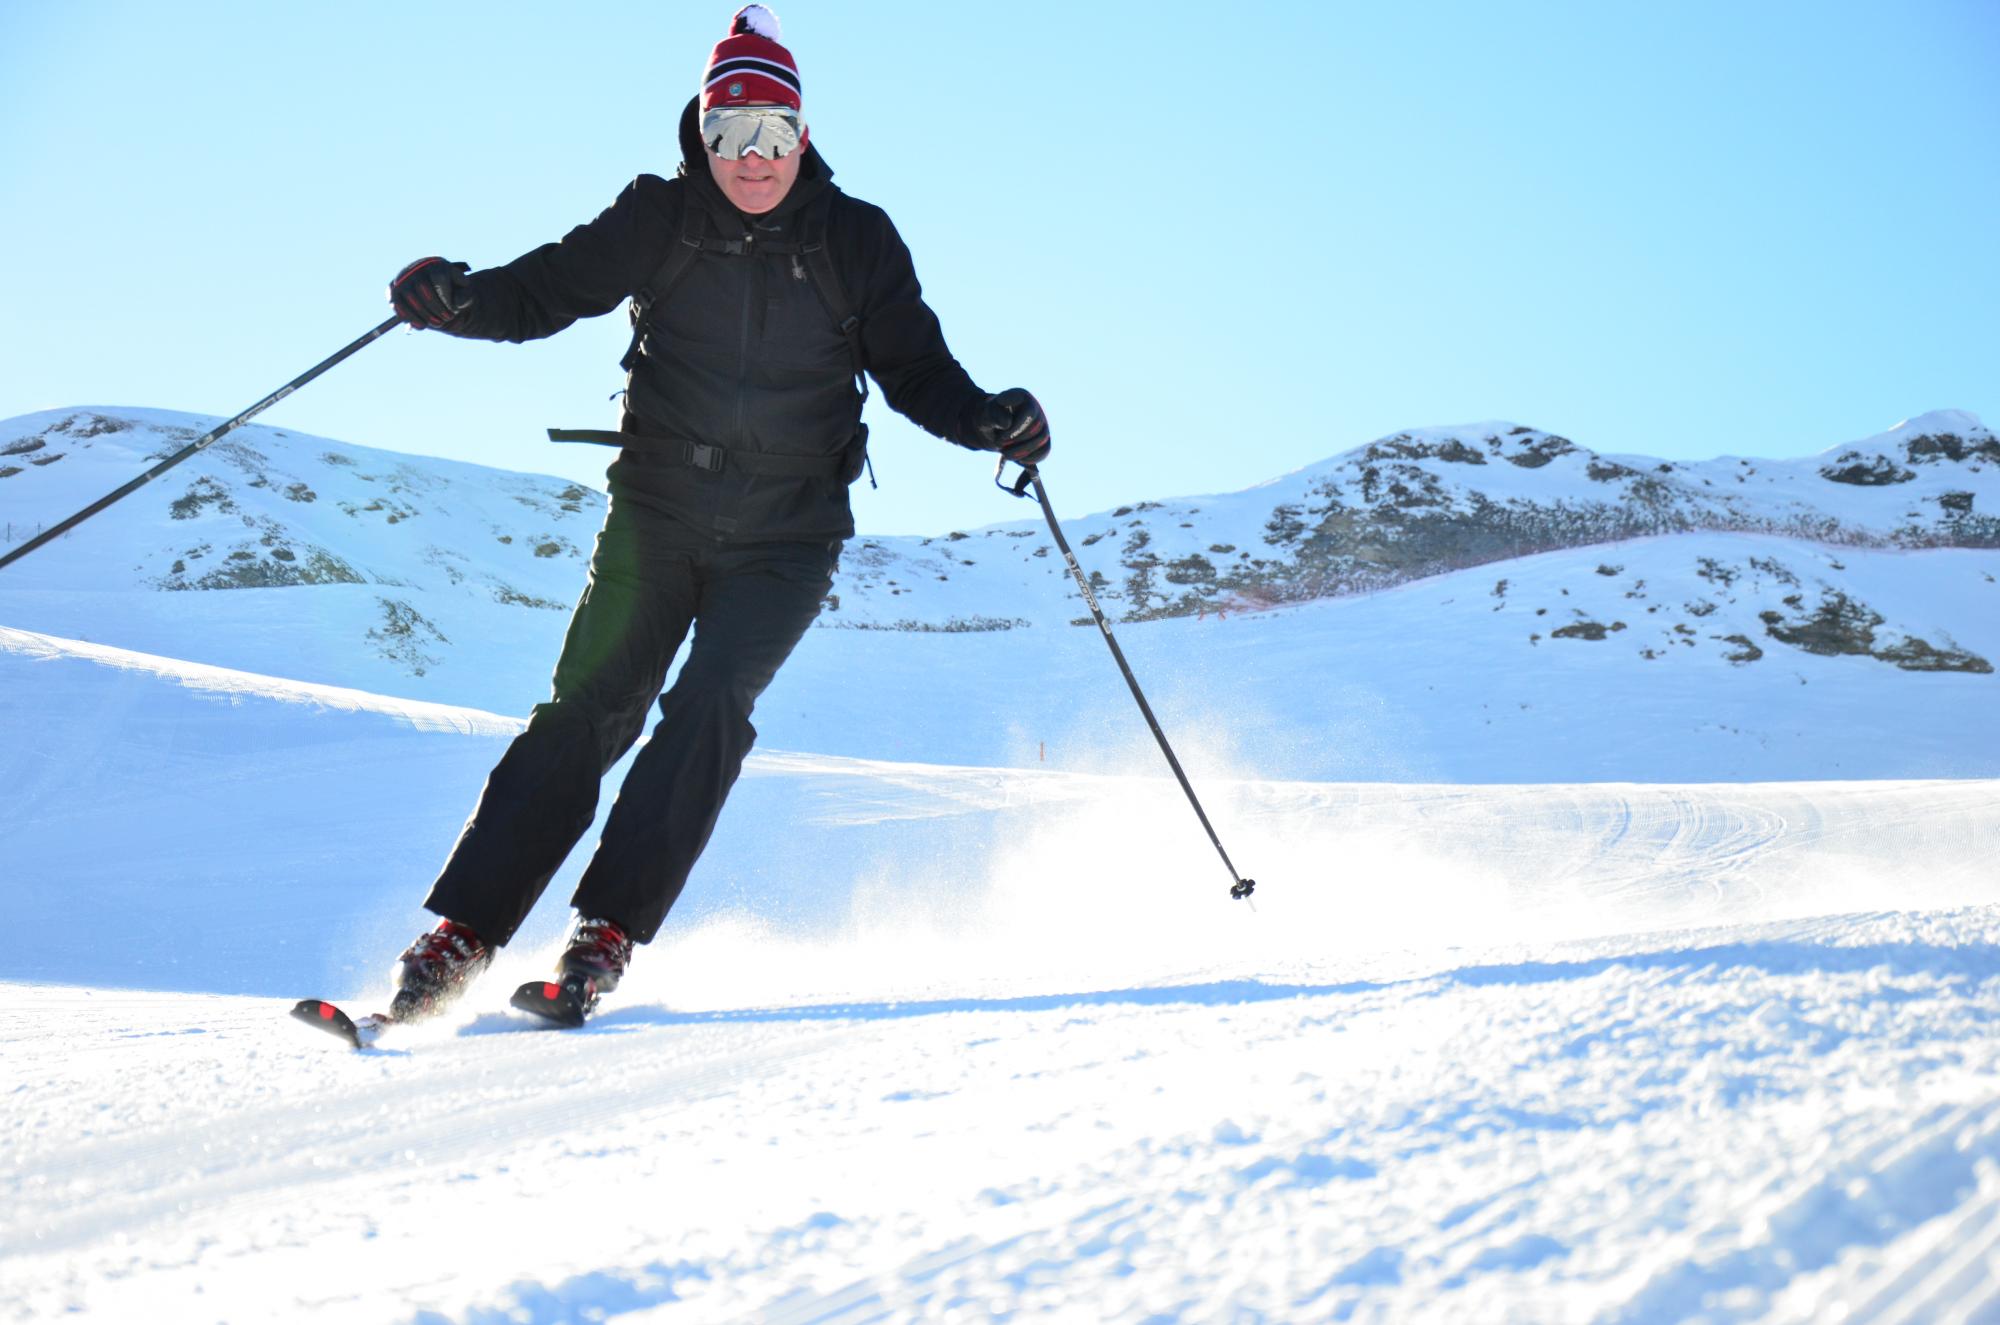  skiing with Ski Club of Ireland group holiday